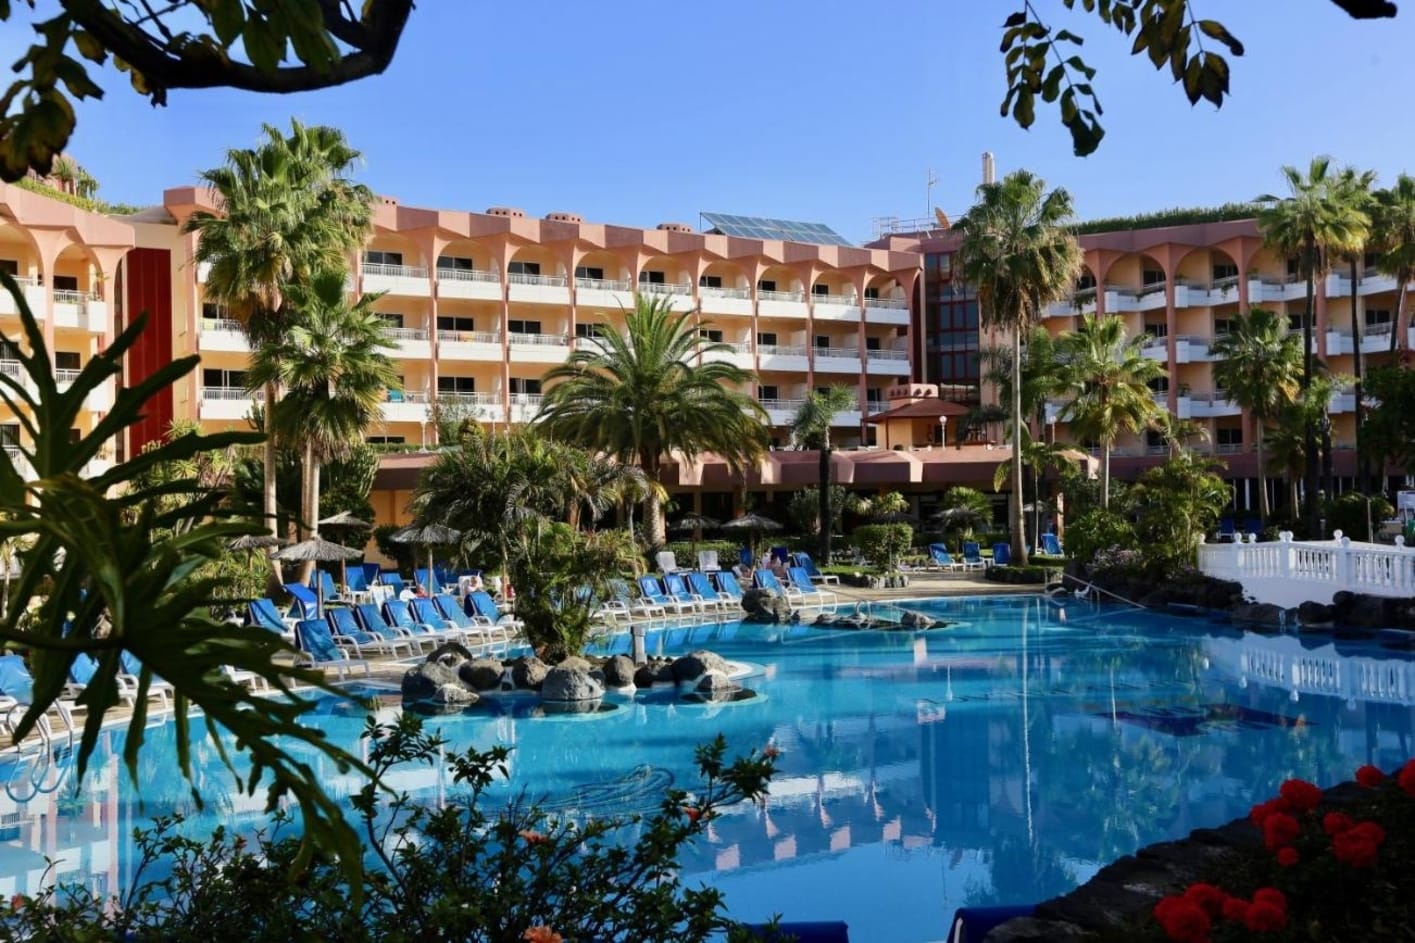 Hotel Puerto Palace, best hotels puerto de la cruz spain